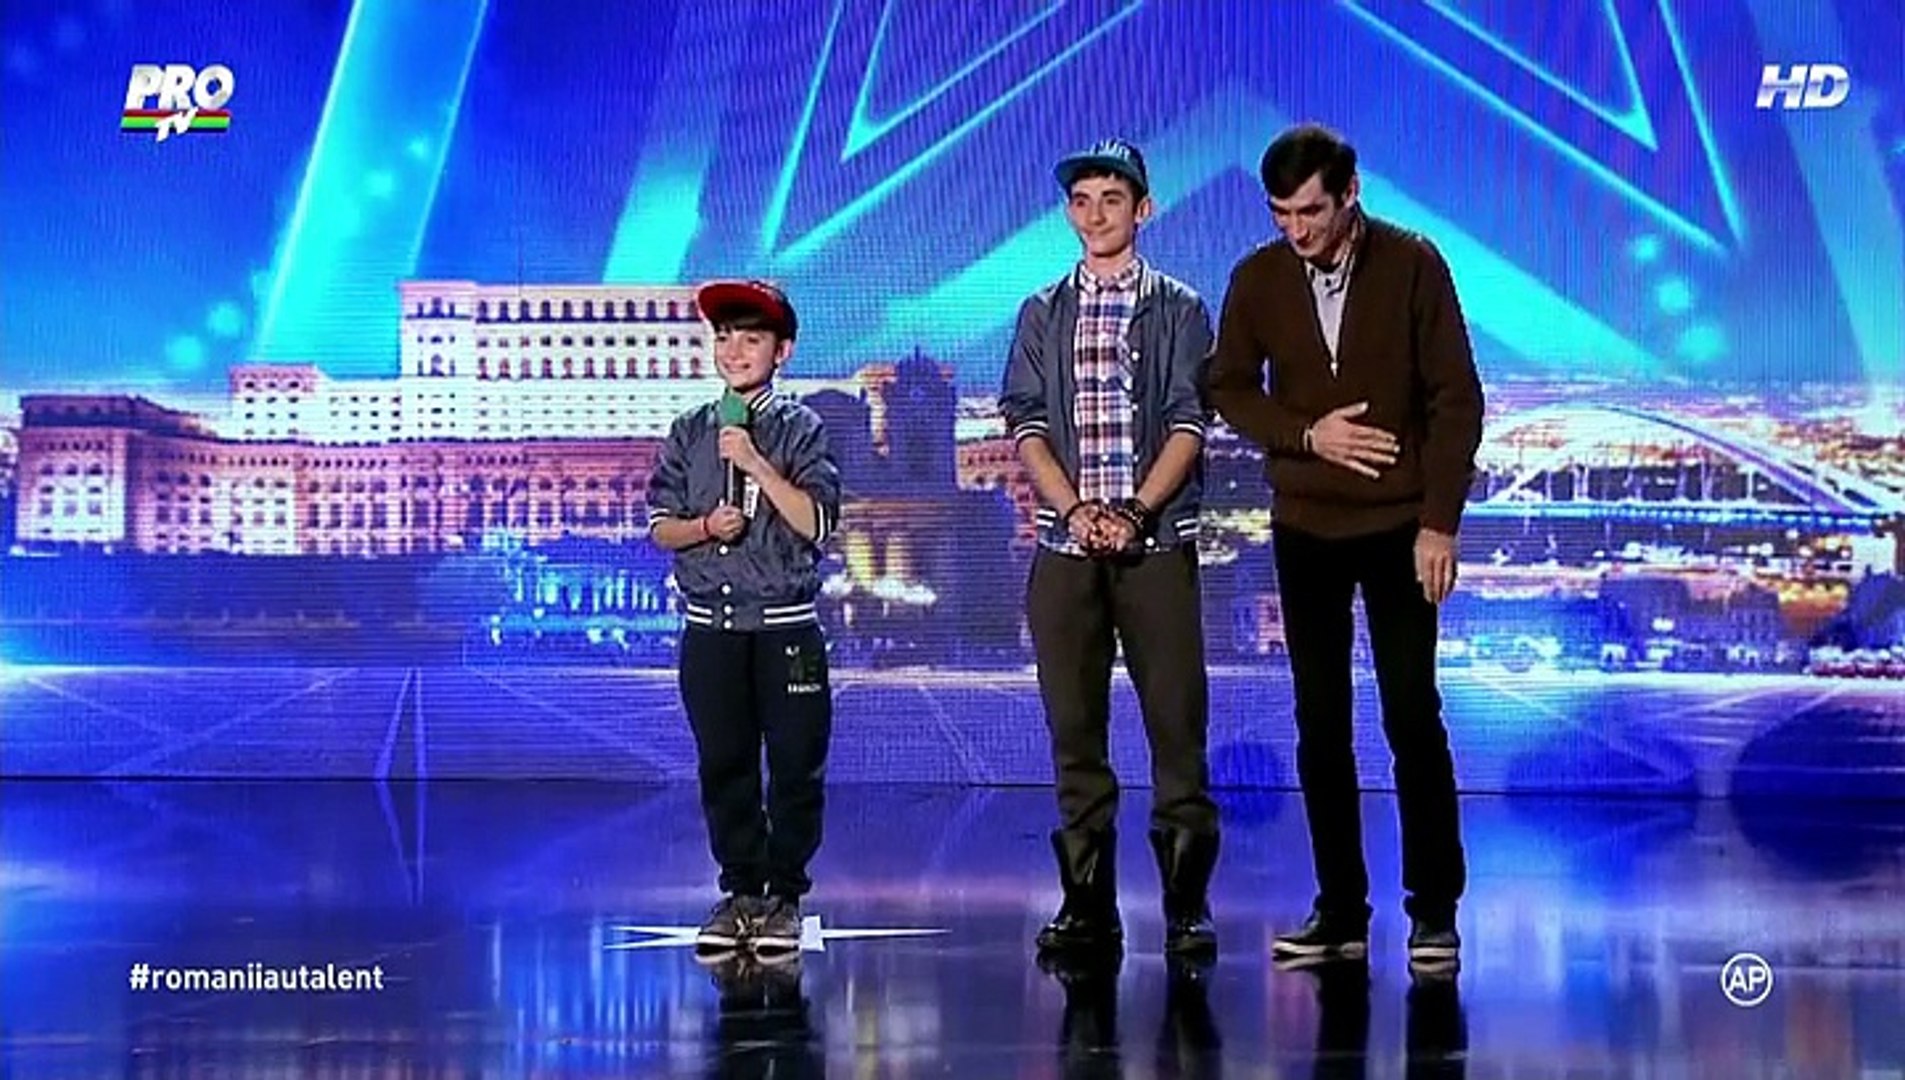 Romanii au talent - sezonul 5 episodul 7 (s5e07) - 2015 1/3 - video  Dailymotion